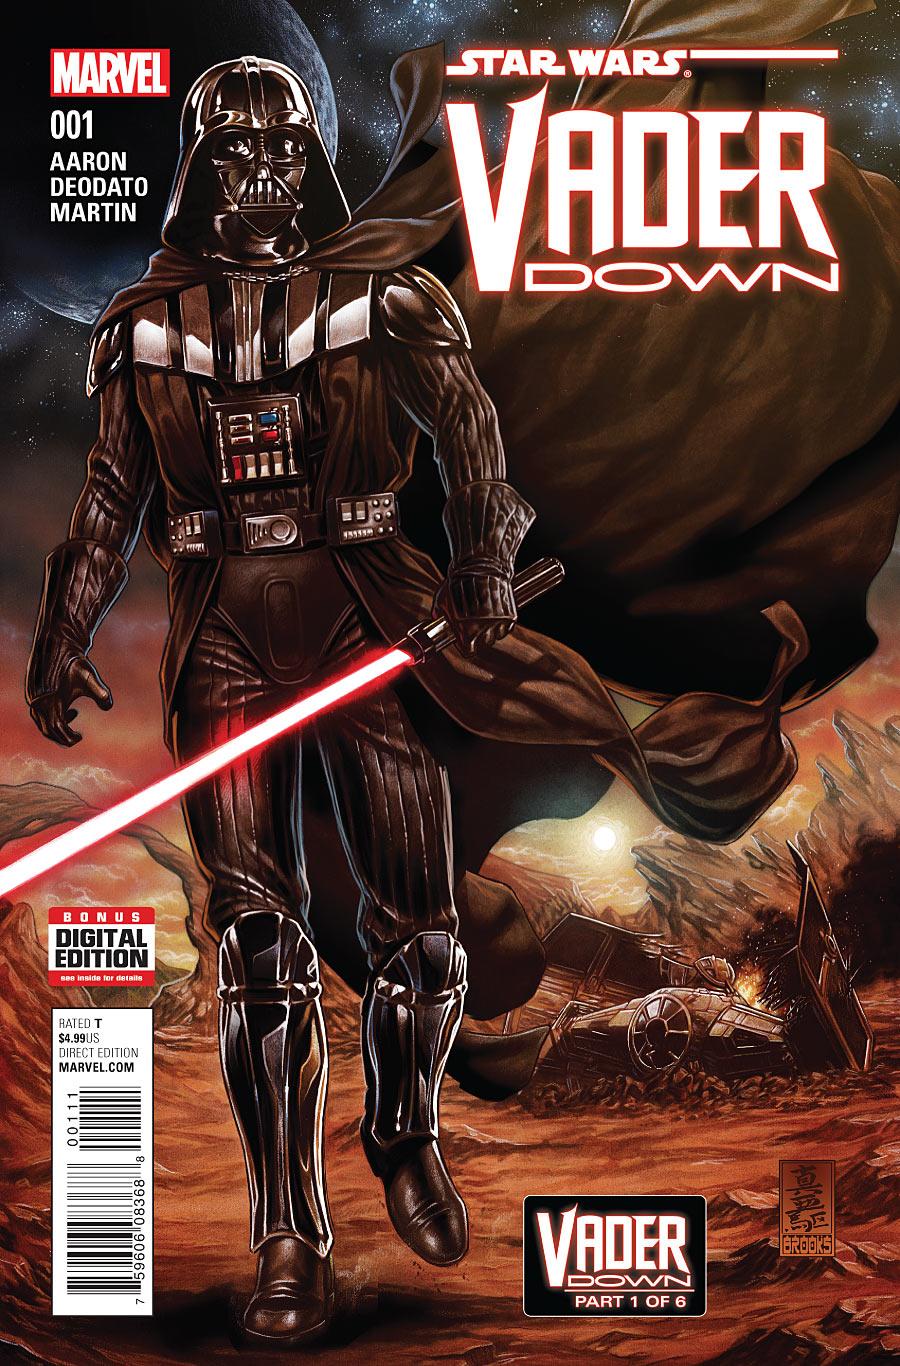 Star Wars: Vader Down Vol. 1 #1